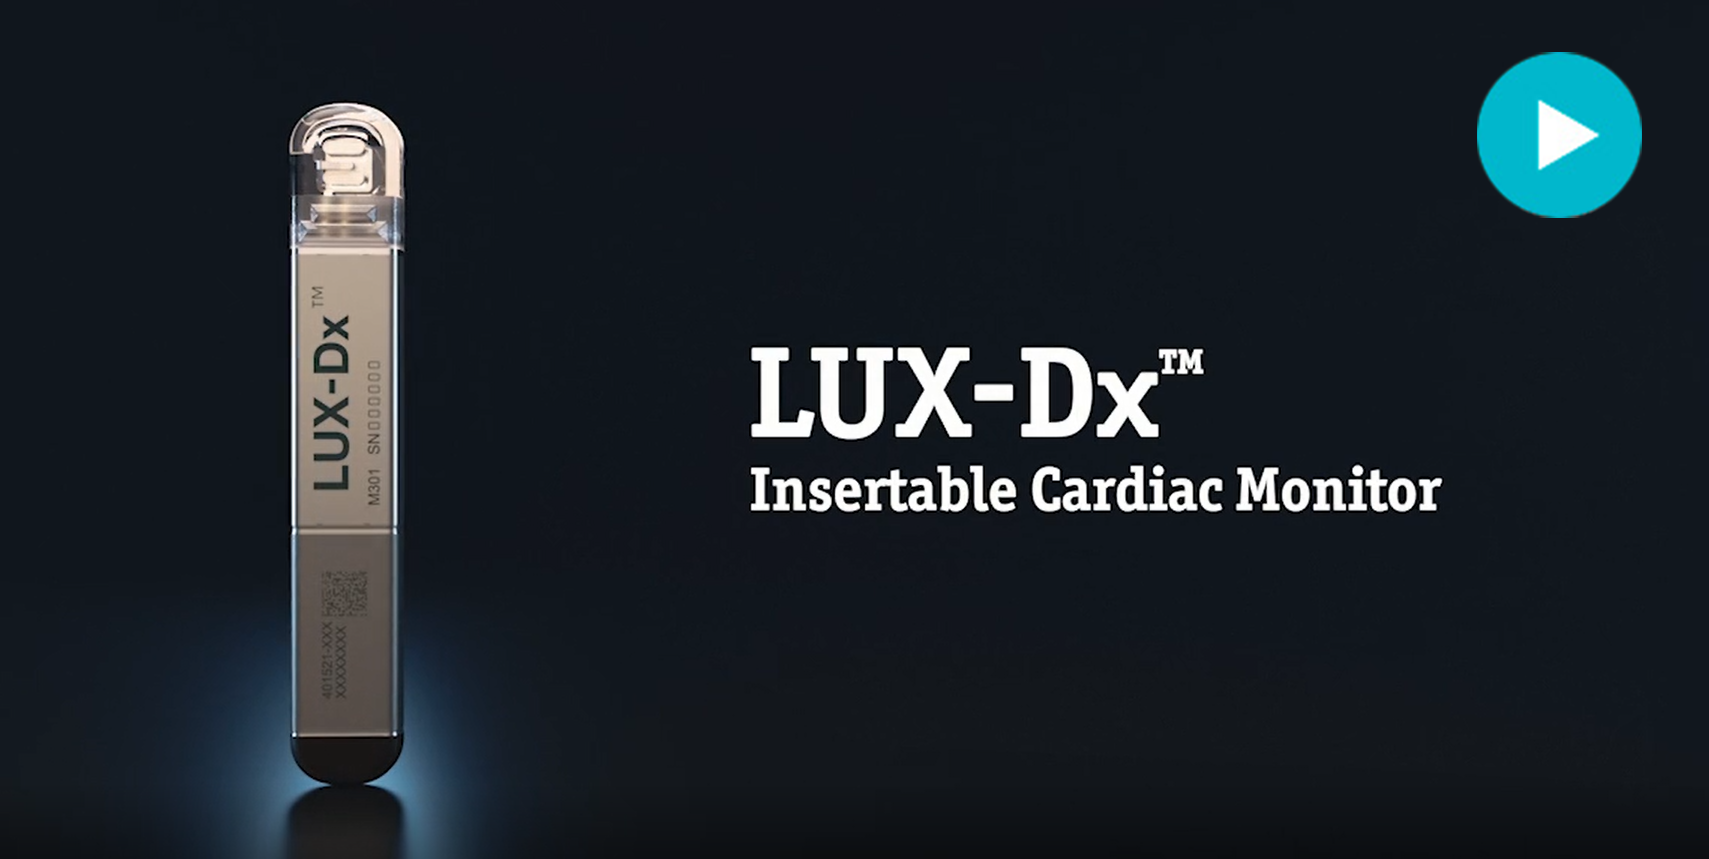 Lux-Dx